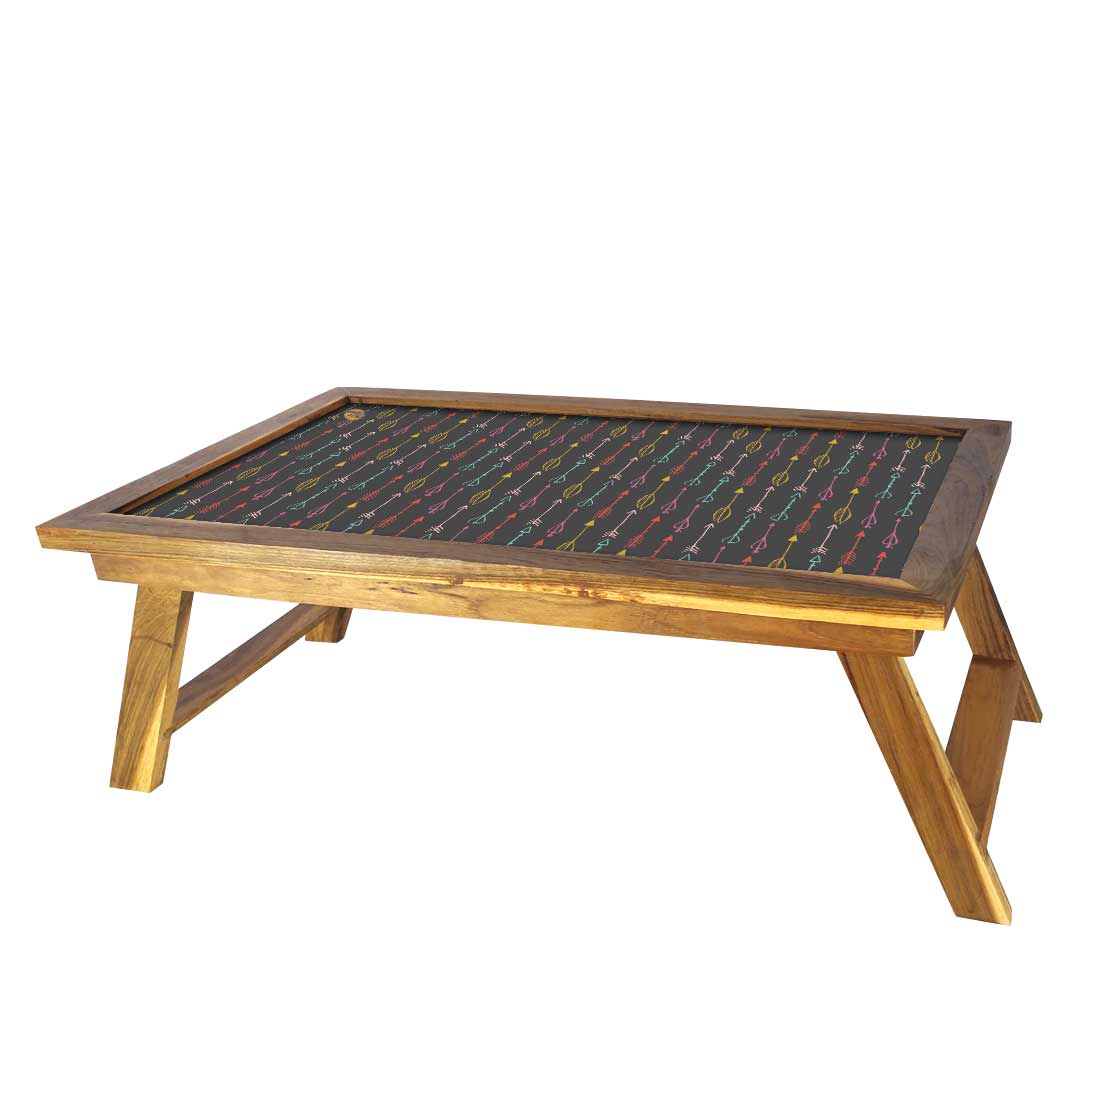 Nutcase Folding Laptop Table For Home Bed Lapdesk Breakfast Table Foldable Teak Wooden Study Desk - Multicolor Arrows Nutcase